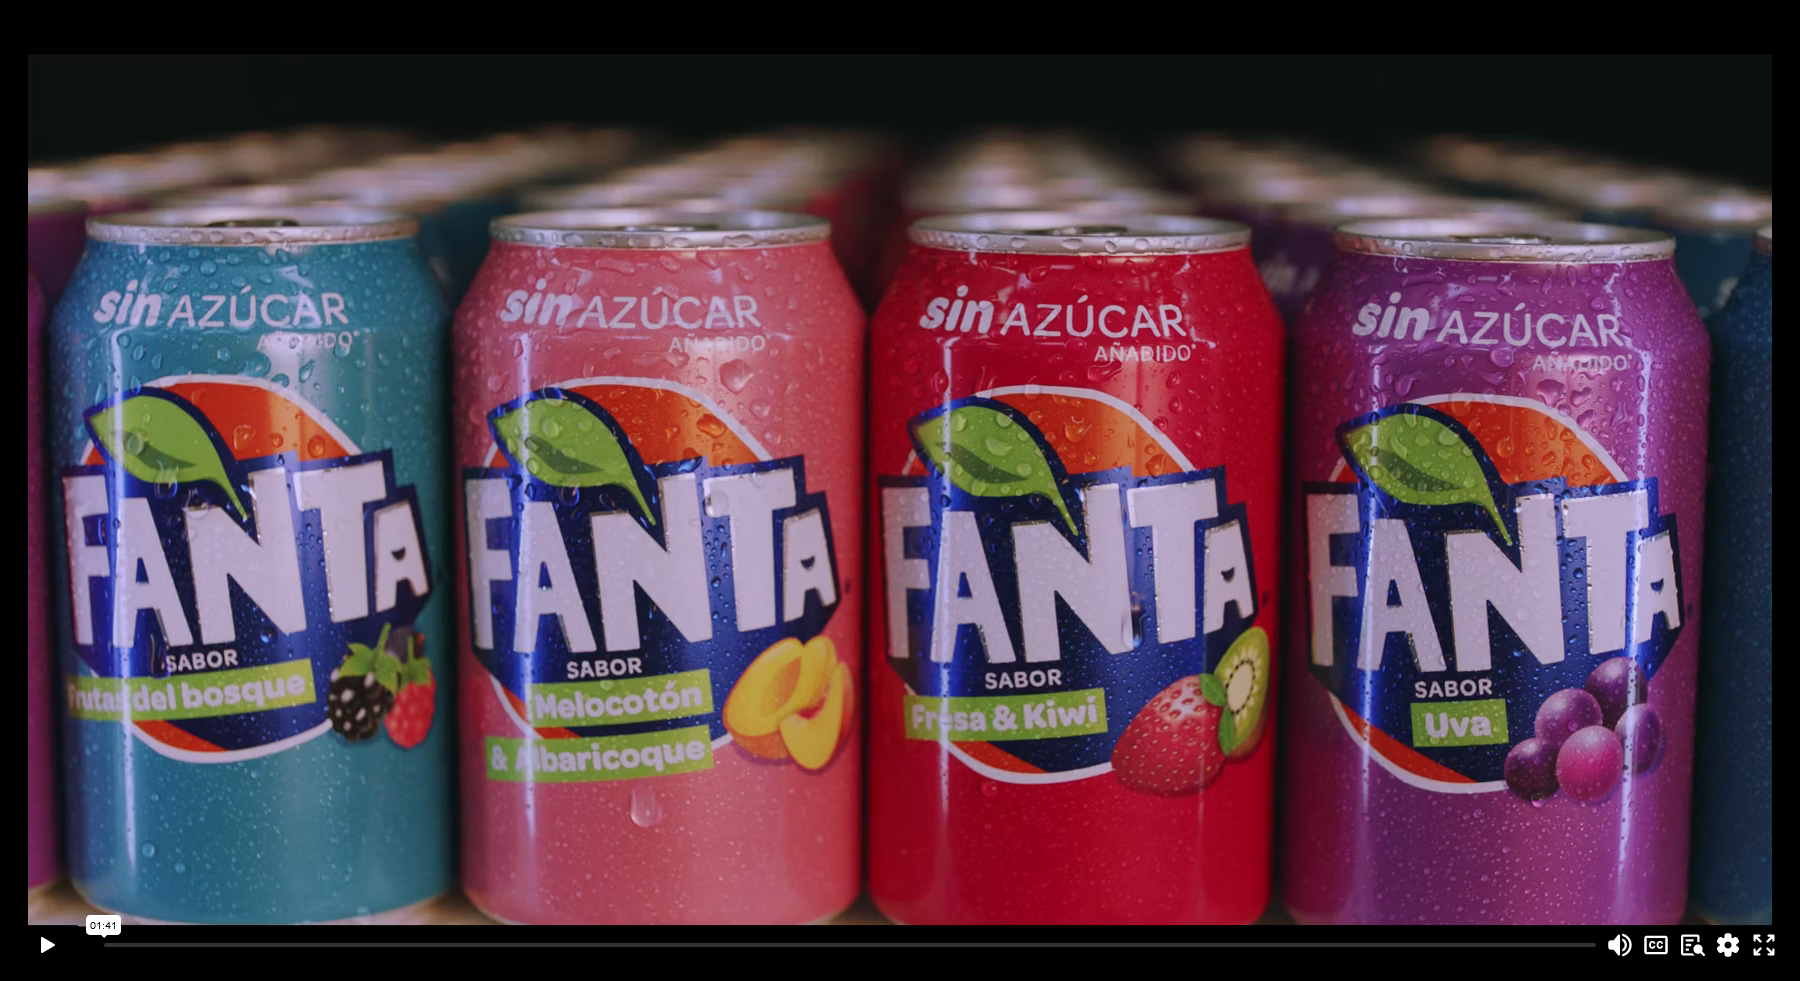 Fanta - Battle of Flavors